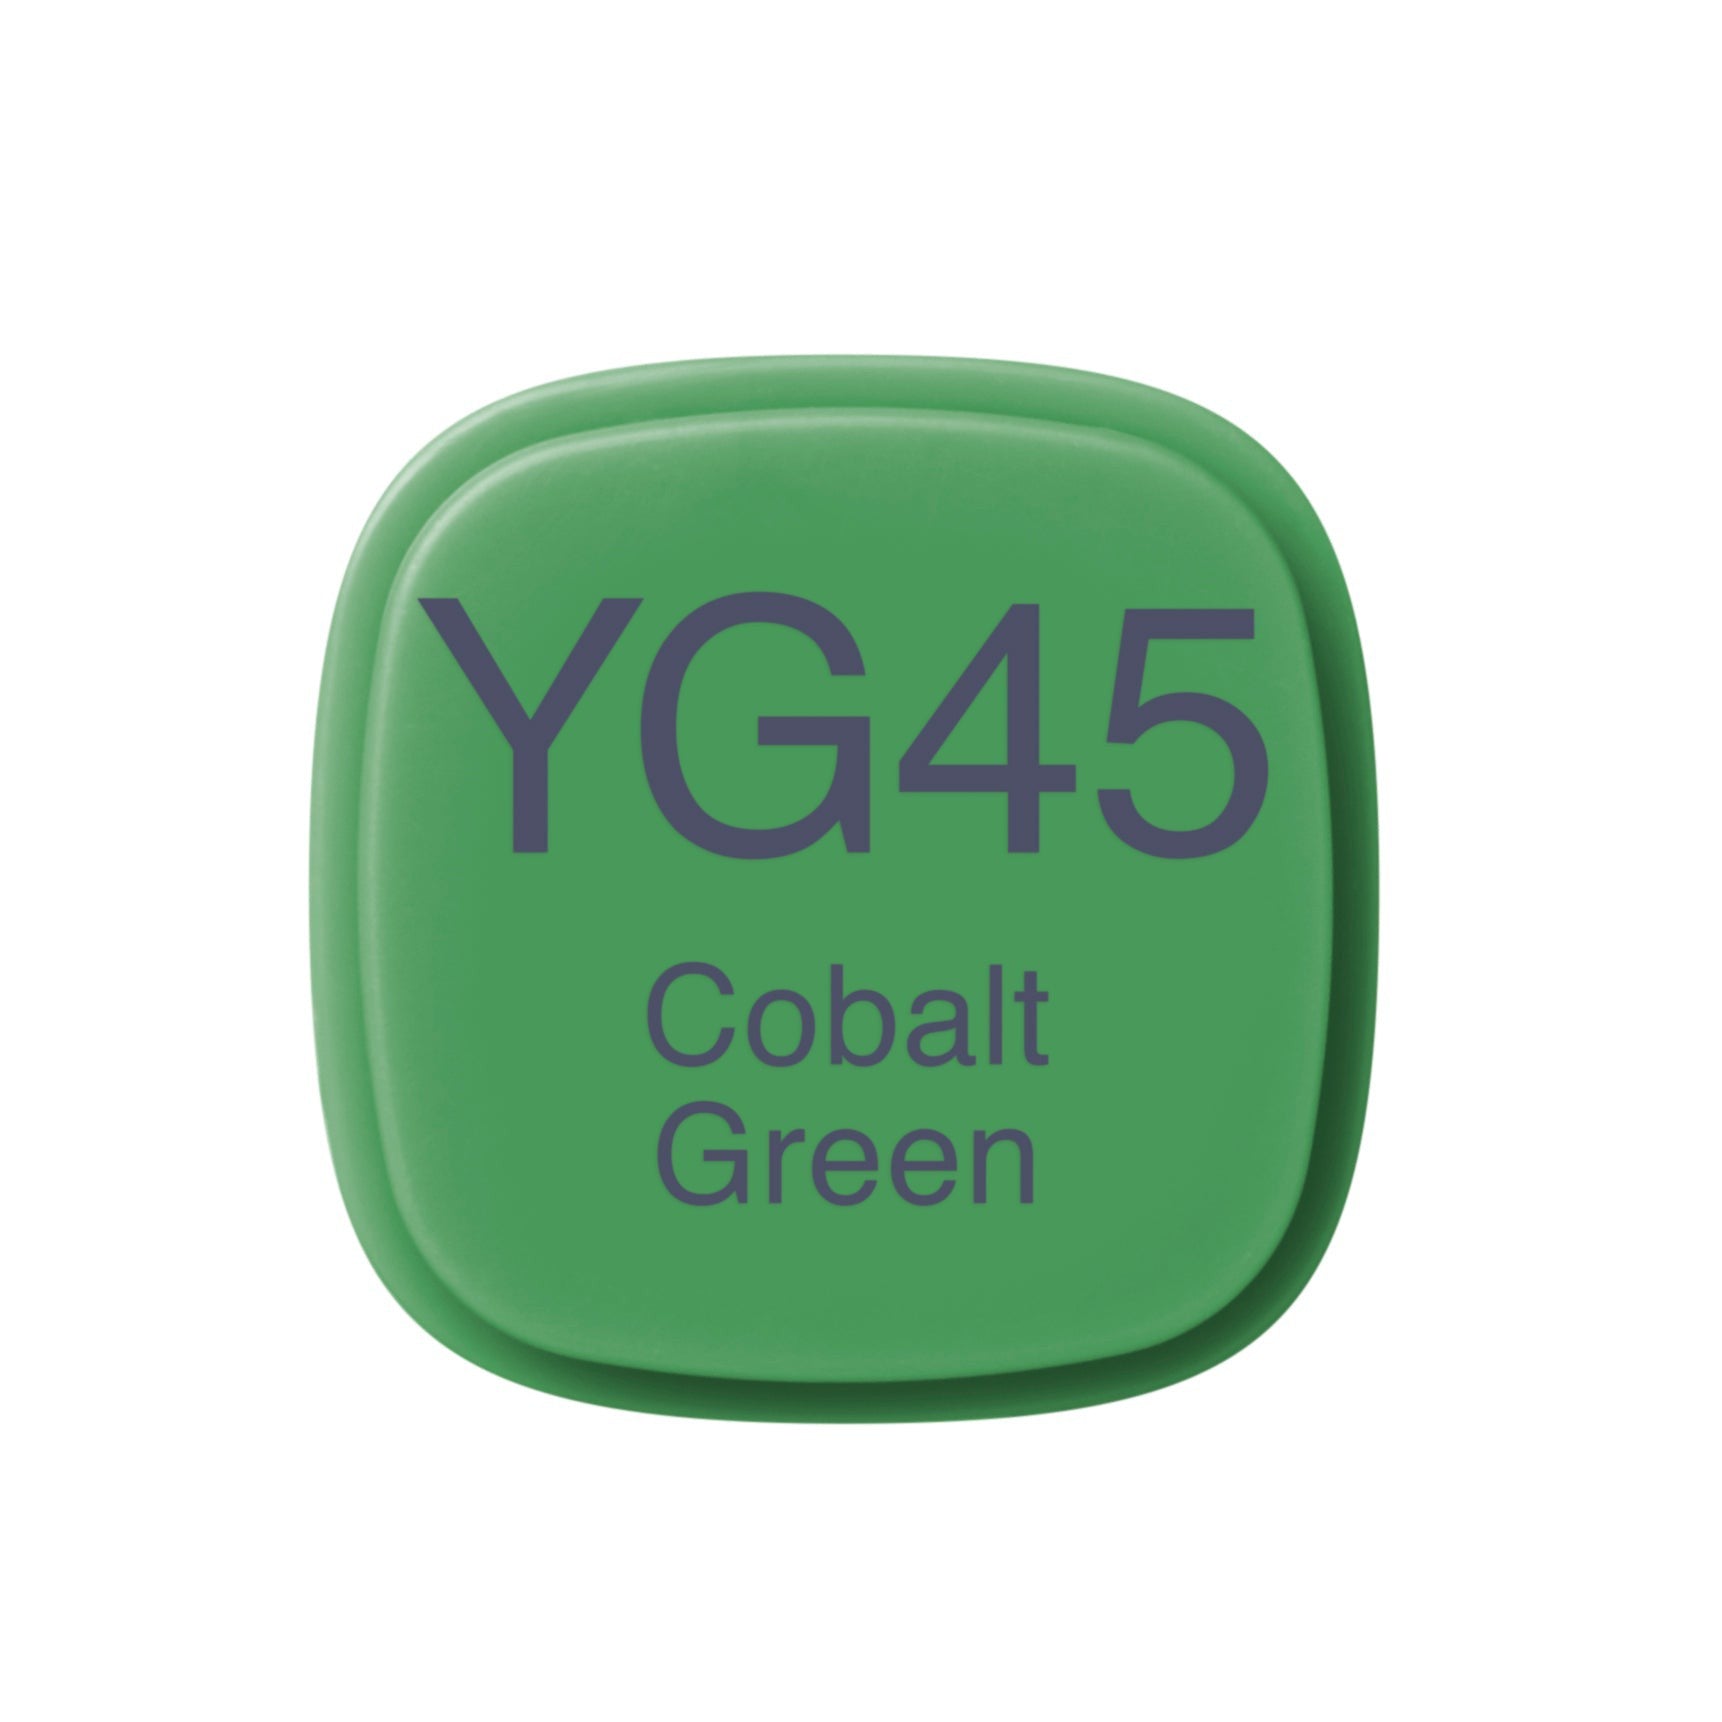 Copic - Original Marker - Cobalt Green - YG45-ScrapbookPal